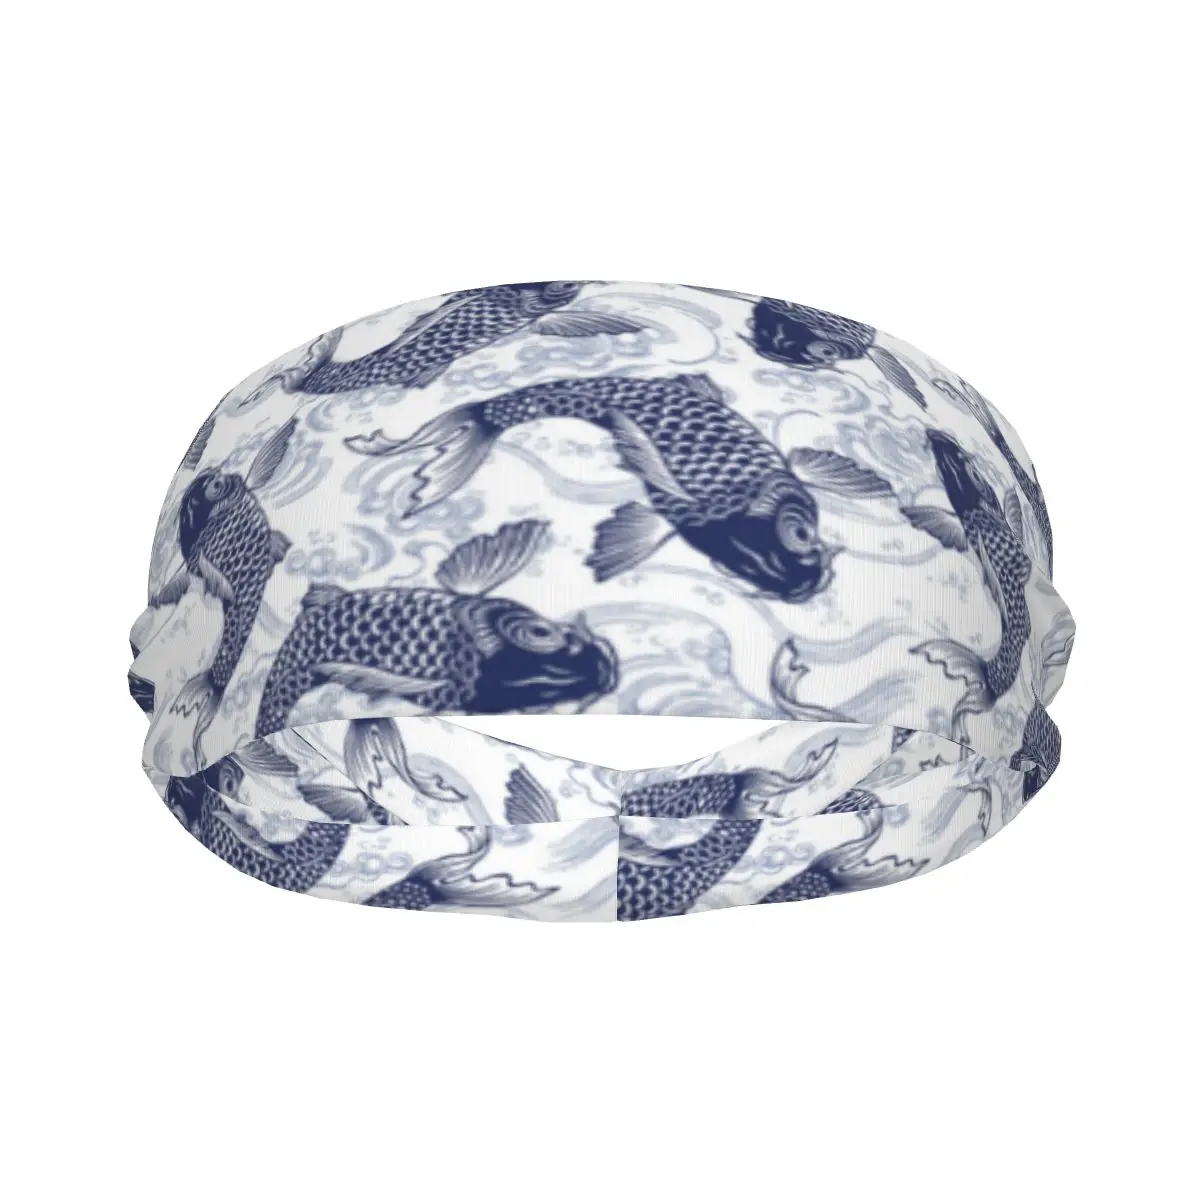 Headband Blue Fish Carp Koi Wave Pattern Headwrap Hairband for Tennis Gym Fitness Headwear Hair Accessories